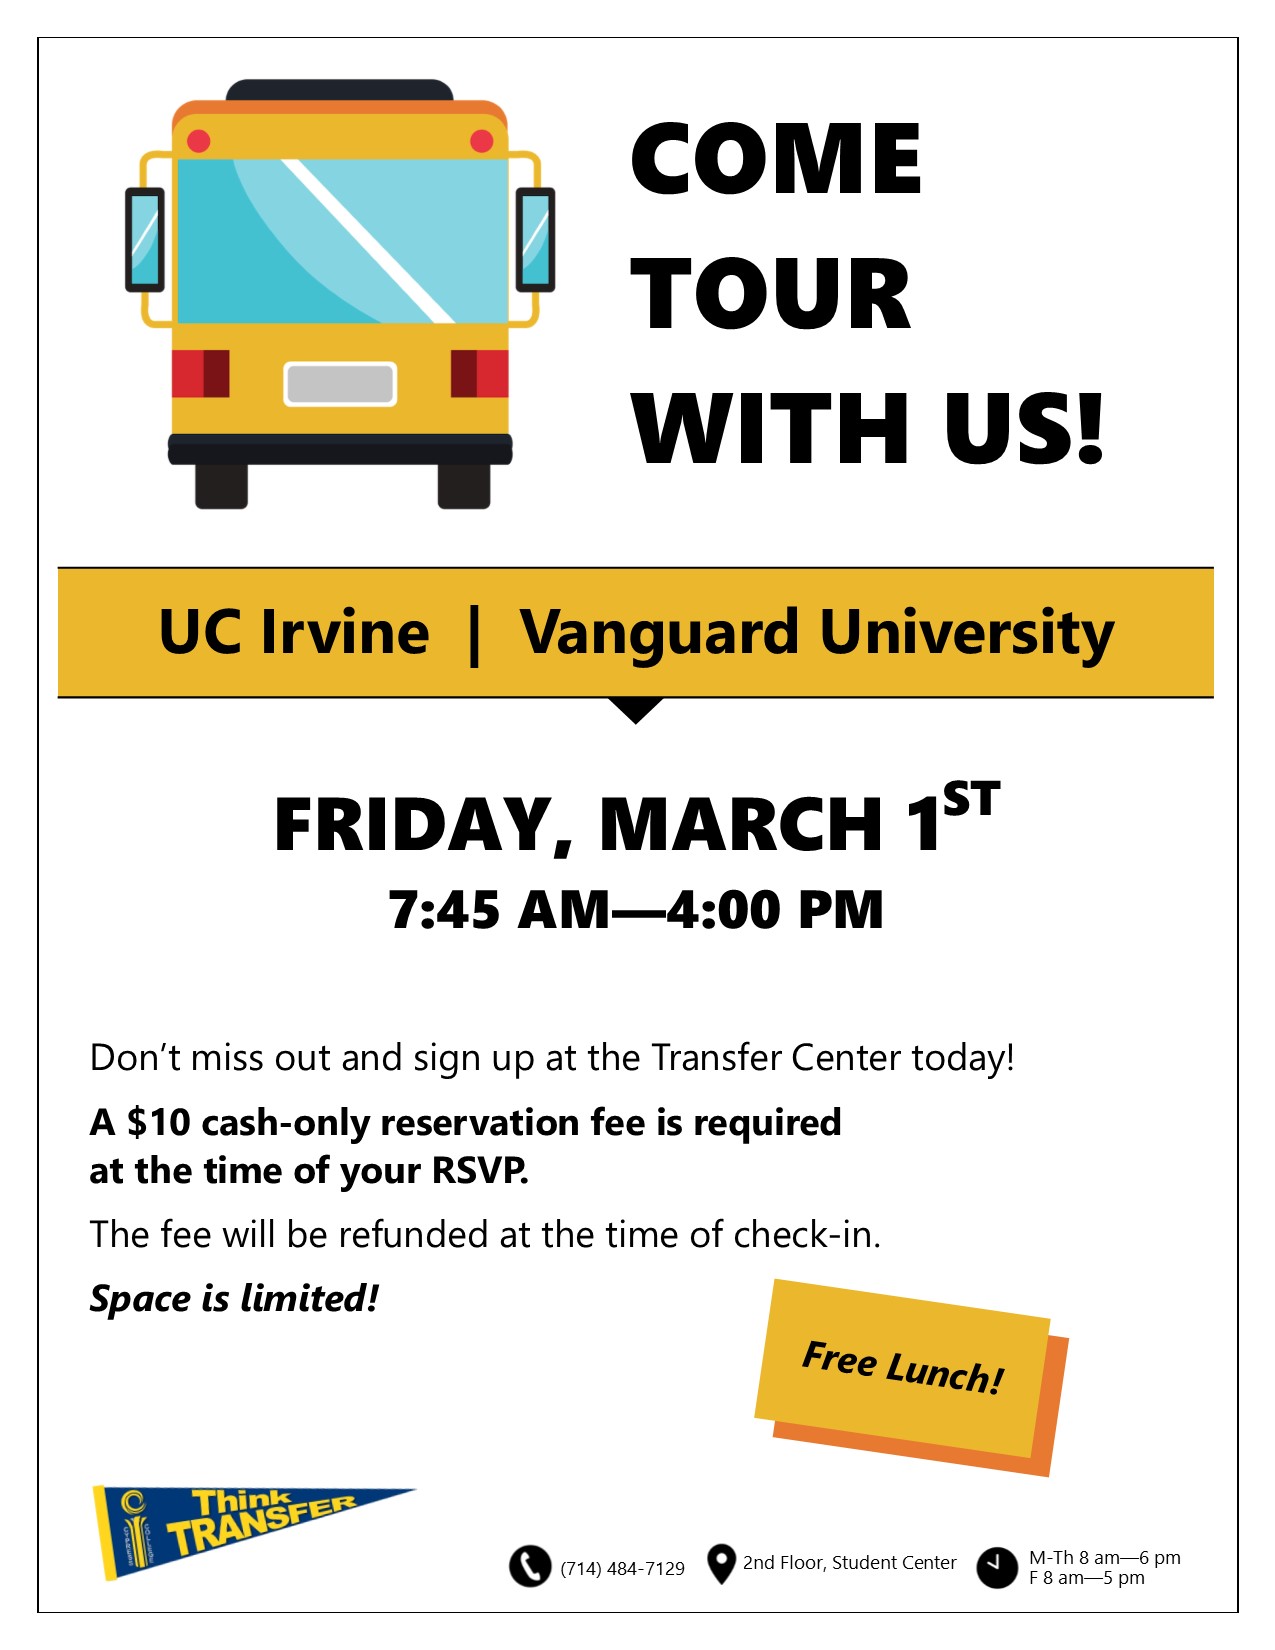 UC Irvine & Vanguard University Bus Tour flyer